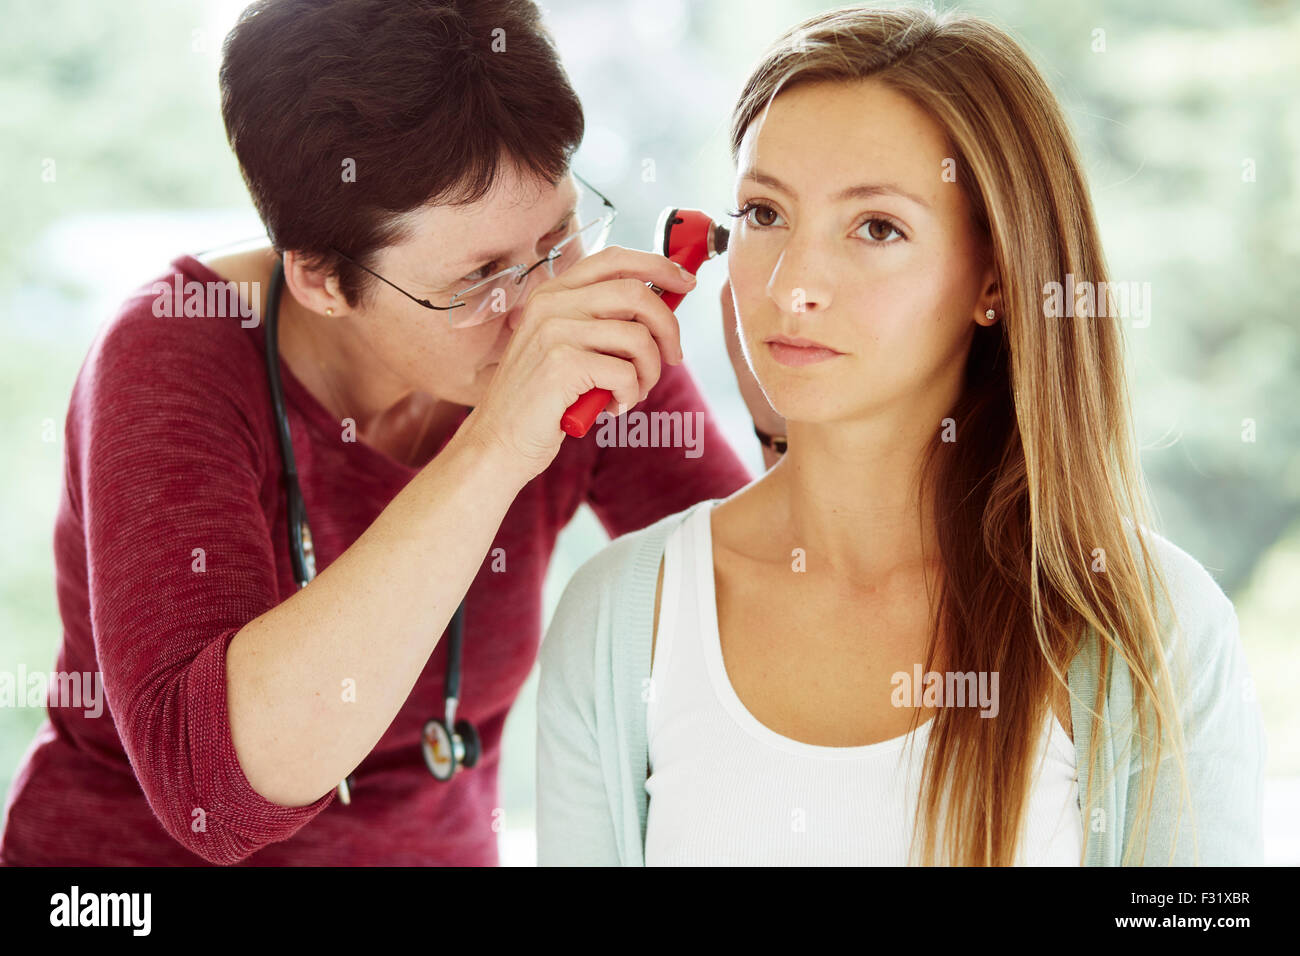 Doctor examining patients ears Stock Photo